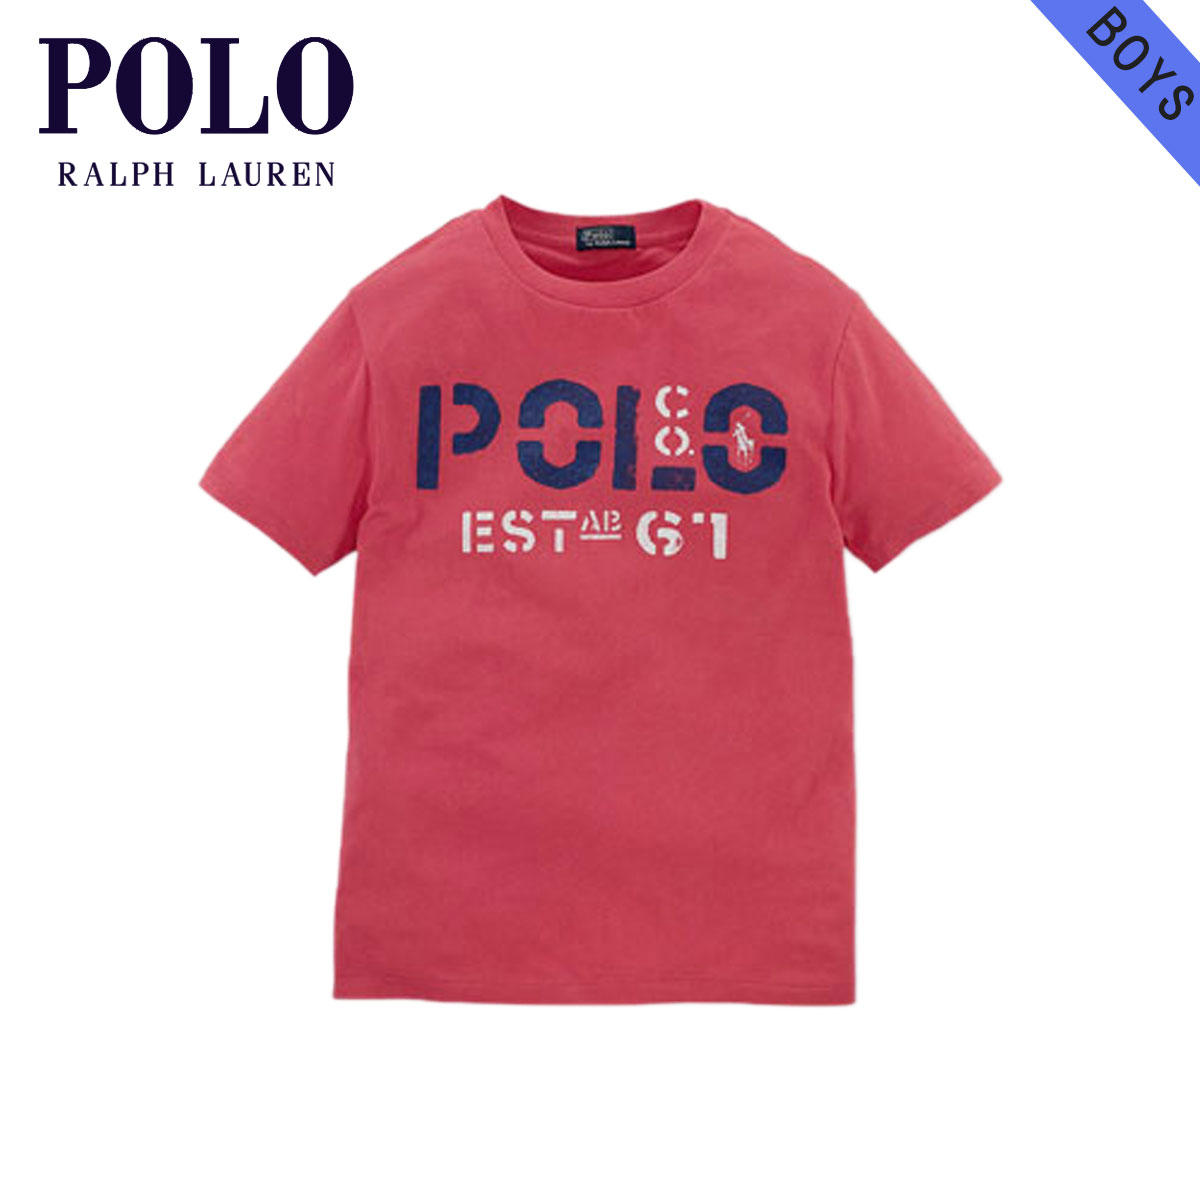 polo ralph lauren graphic t shirts